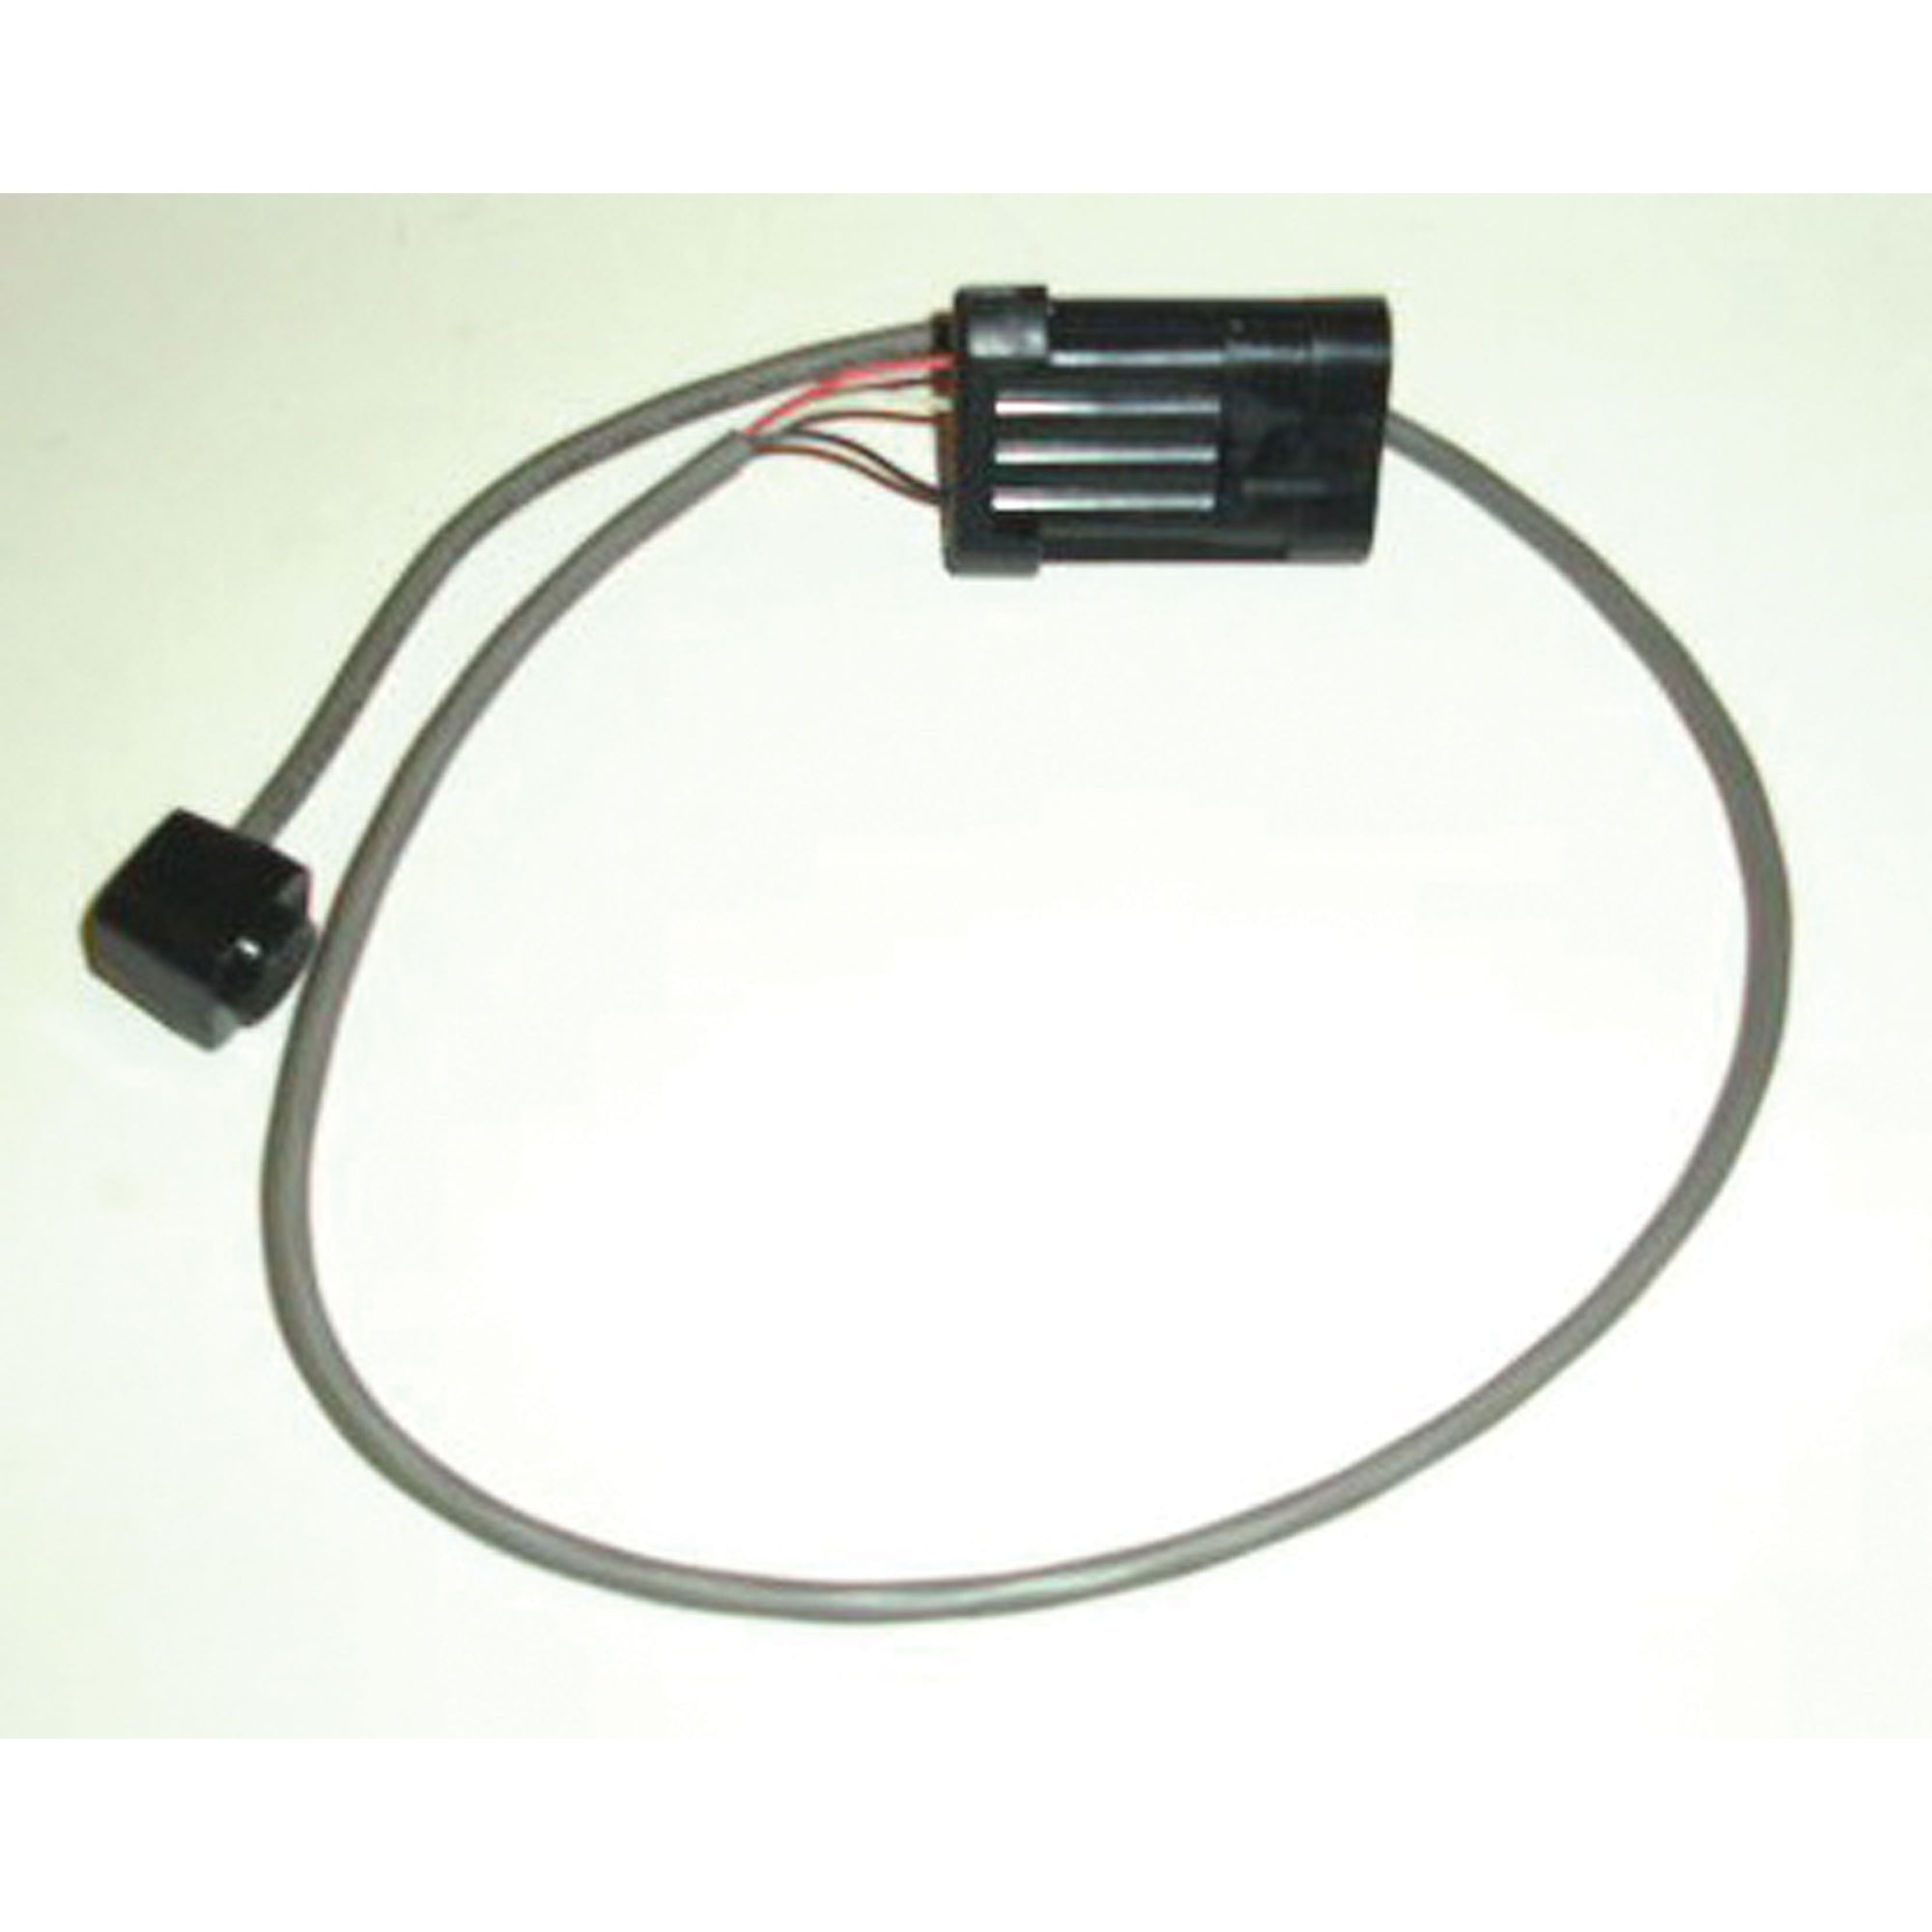 Lippert 383490 Kwikee Power Gear Wire Harness Assy Hal Sensor for Electronic Leveling